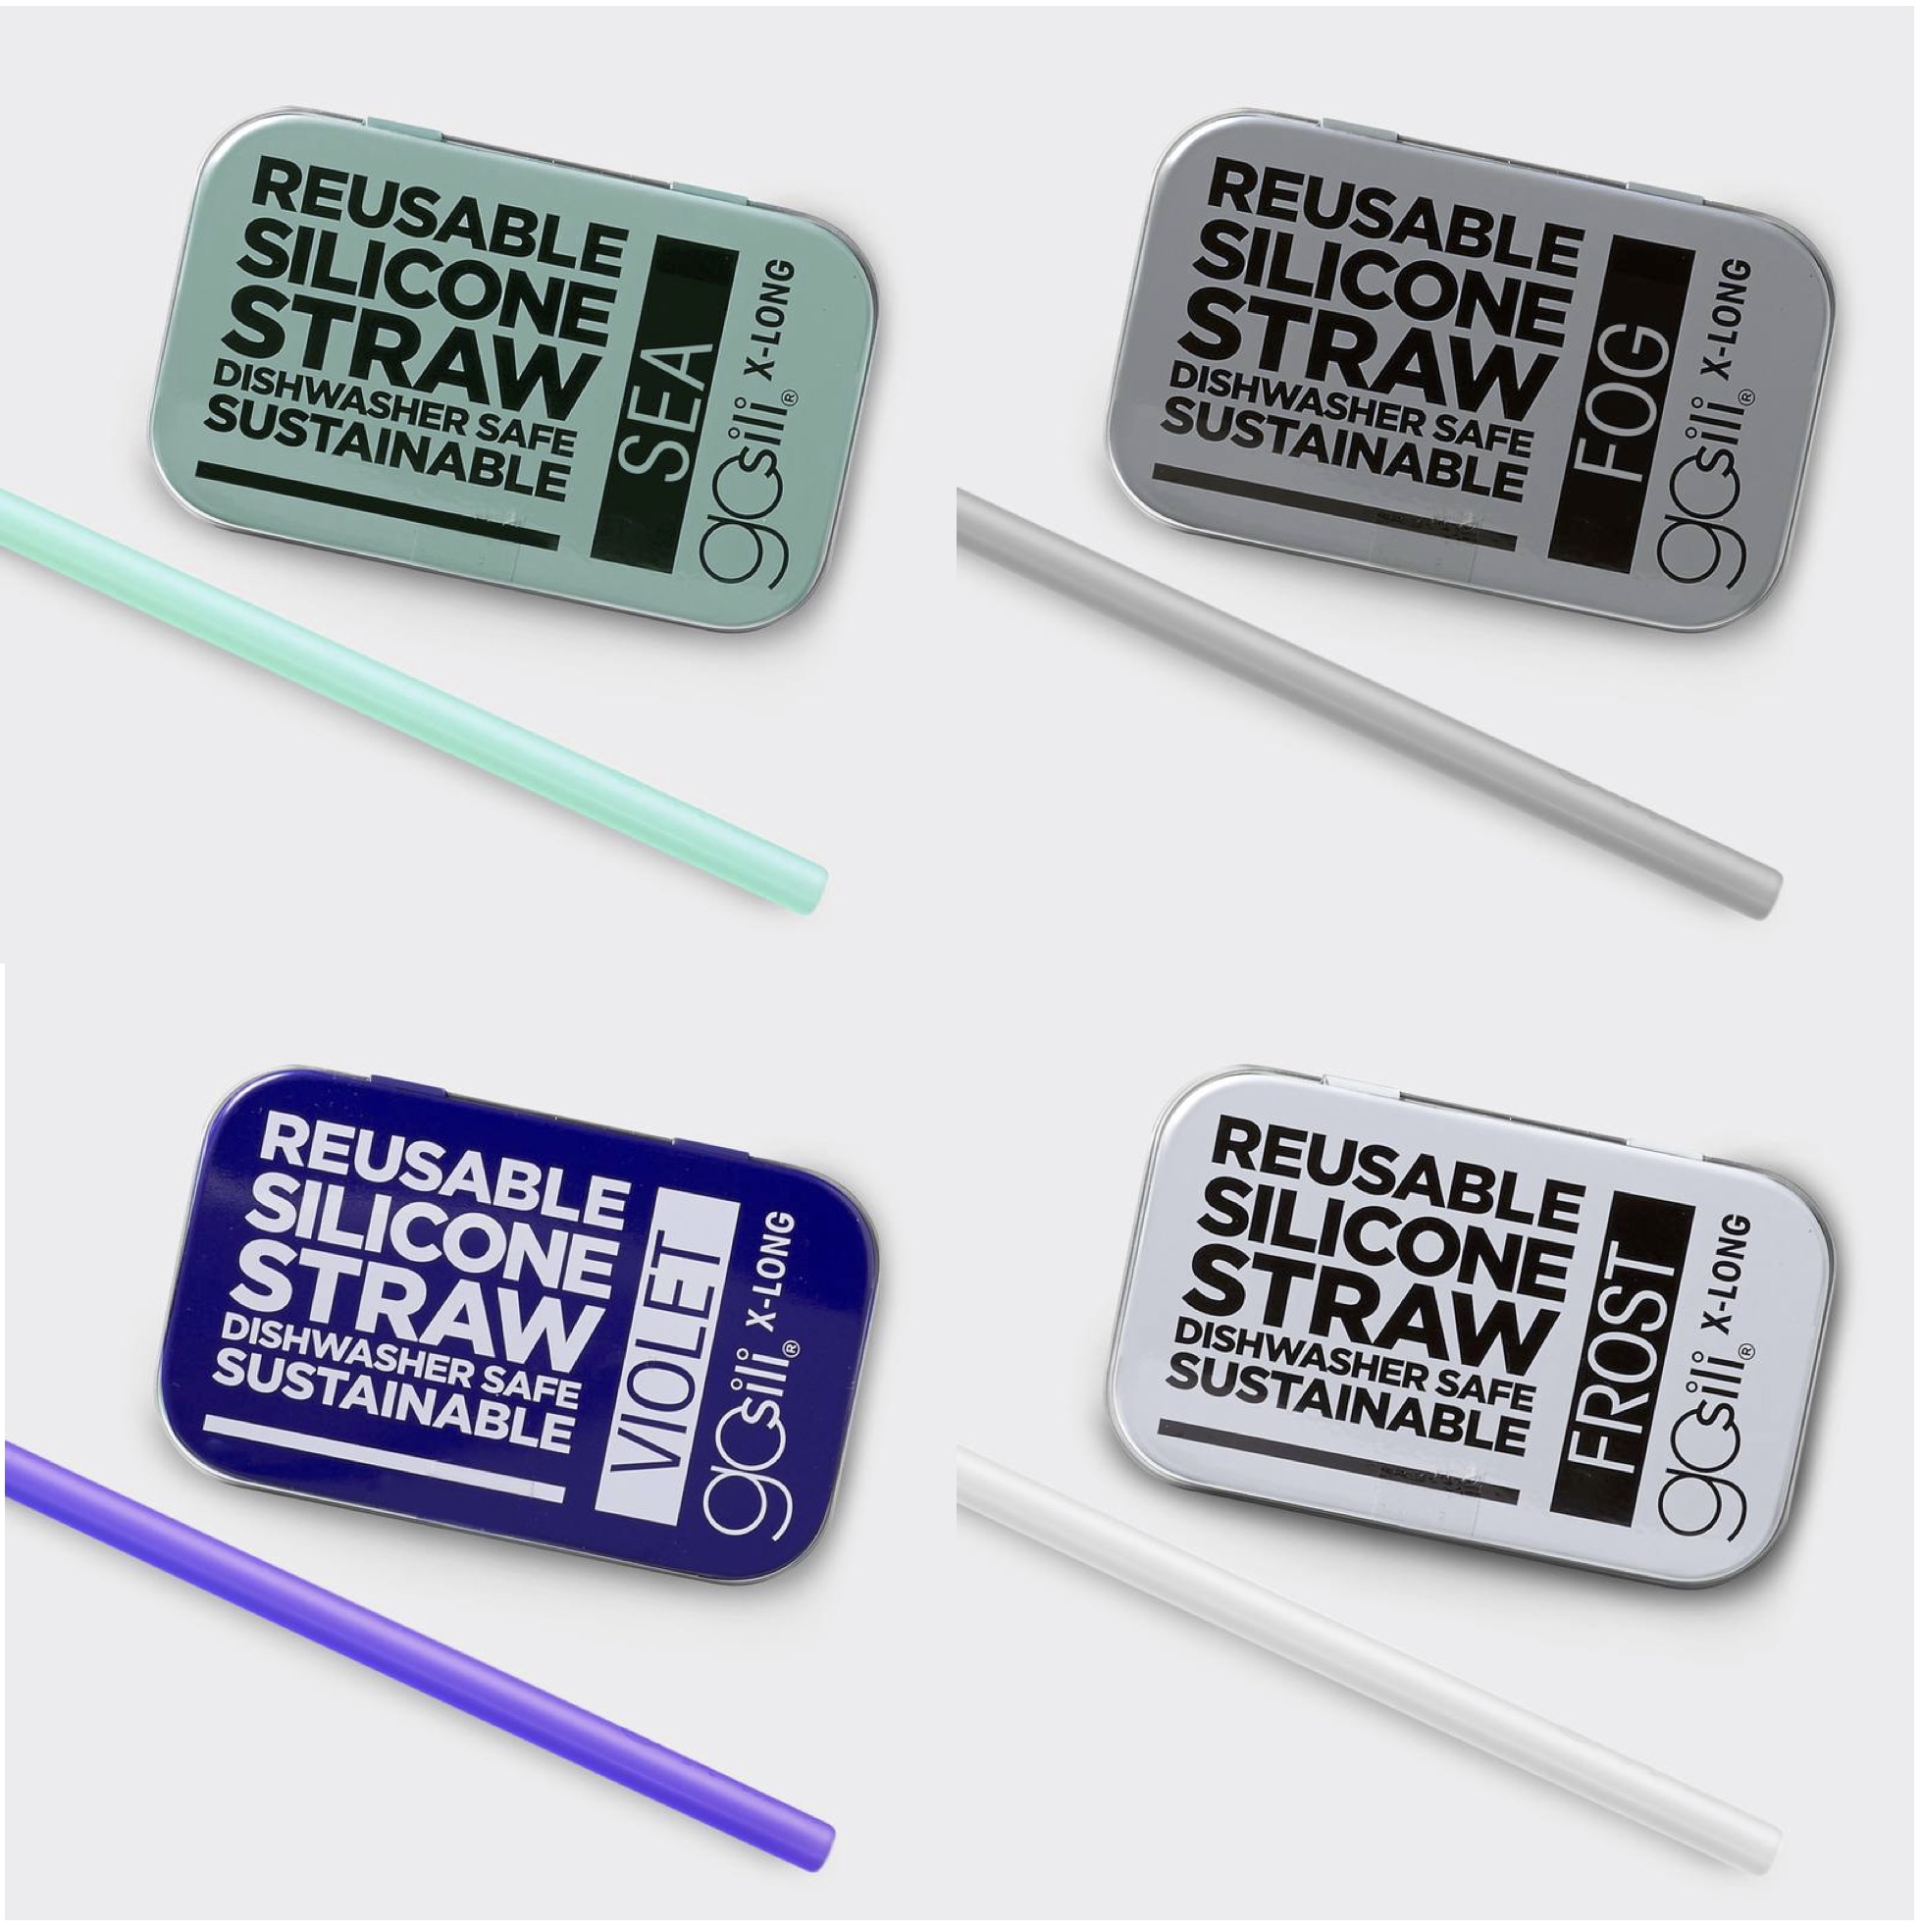 Gosili Reusable Silicone Straw – The Green Corner Store